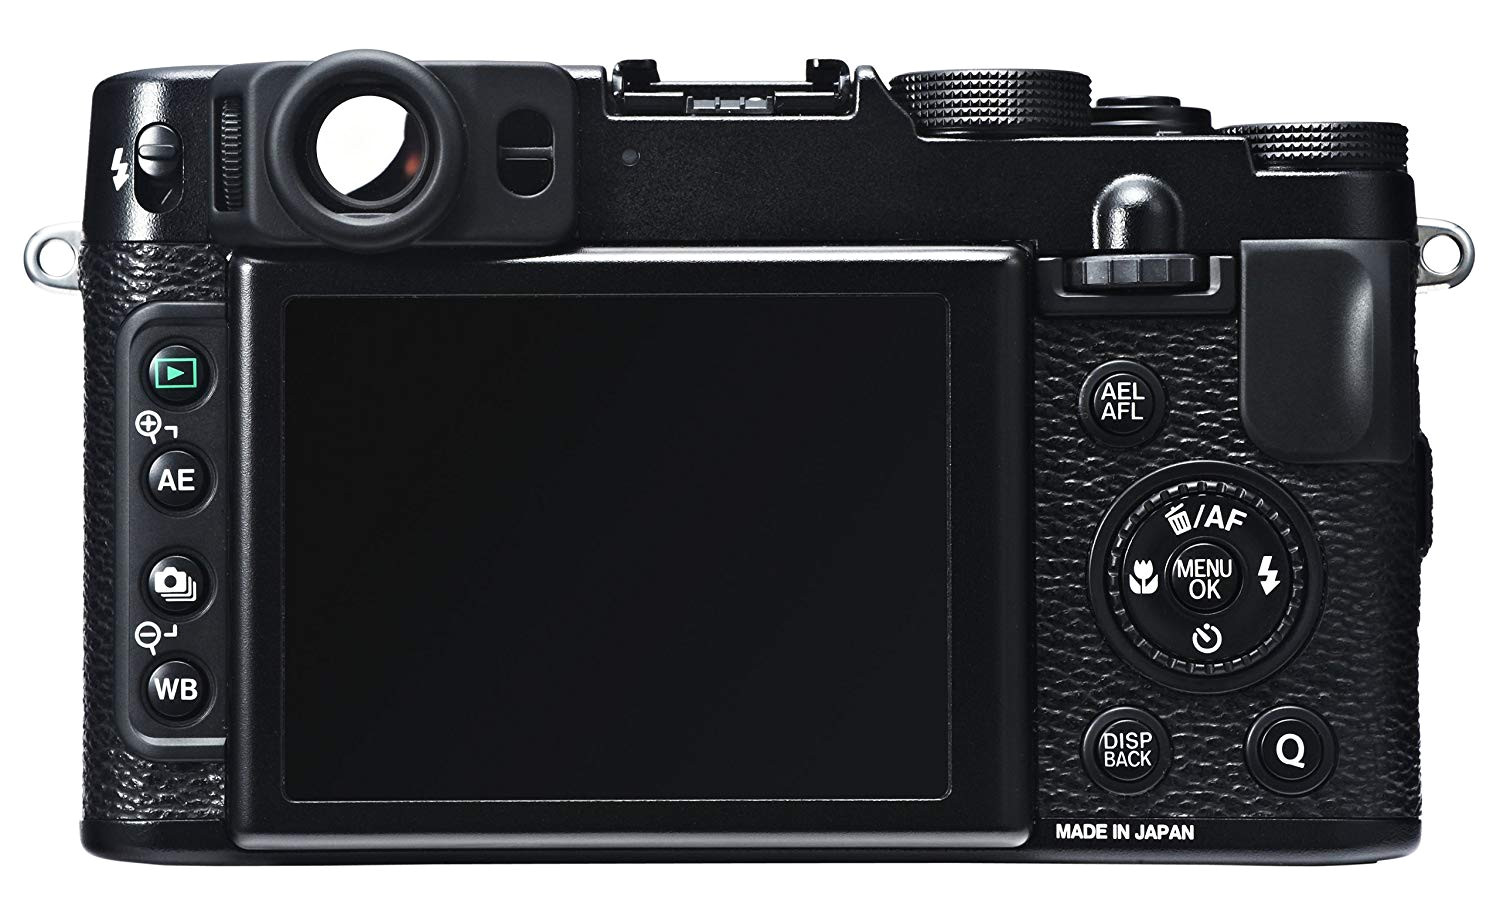 amazon com fujifilm x20 12 mp digital camera with 2 8 inch lcd black point and shoot digital cameras camera photo